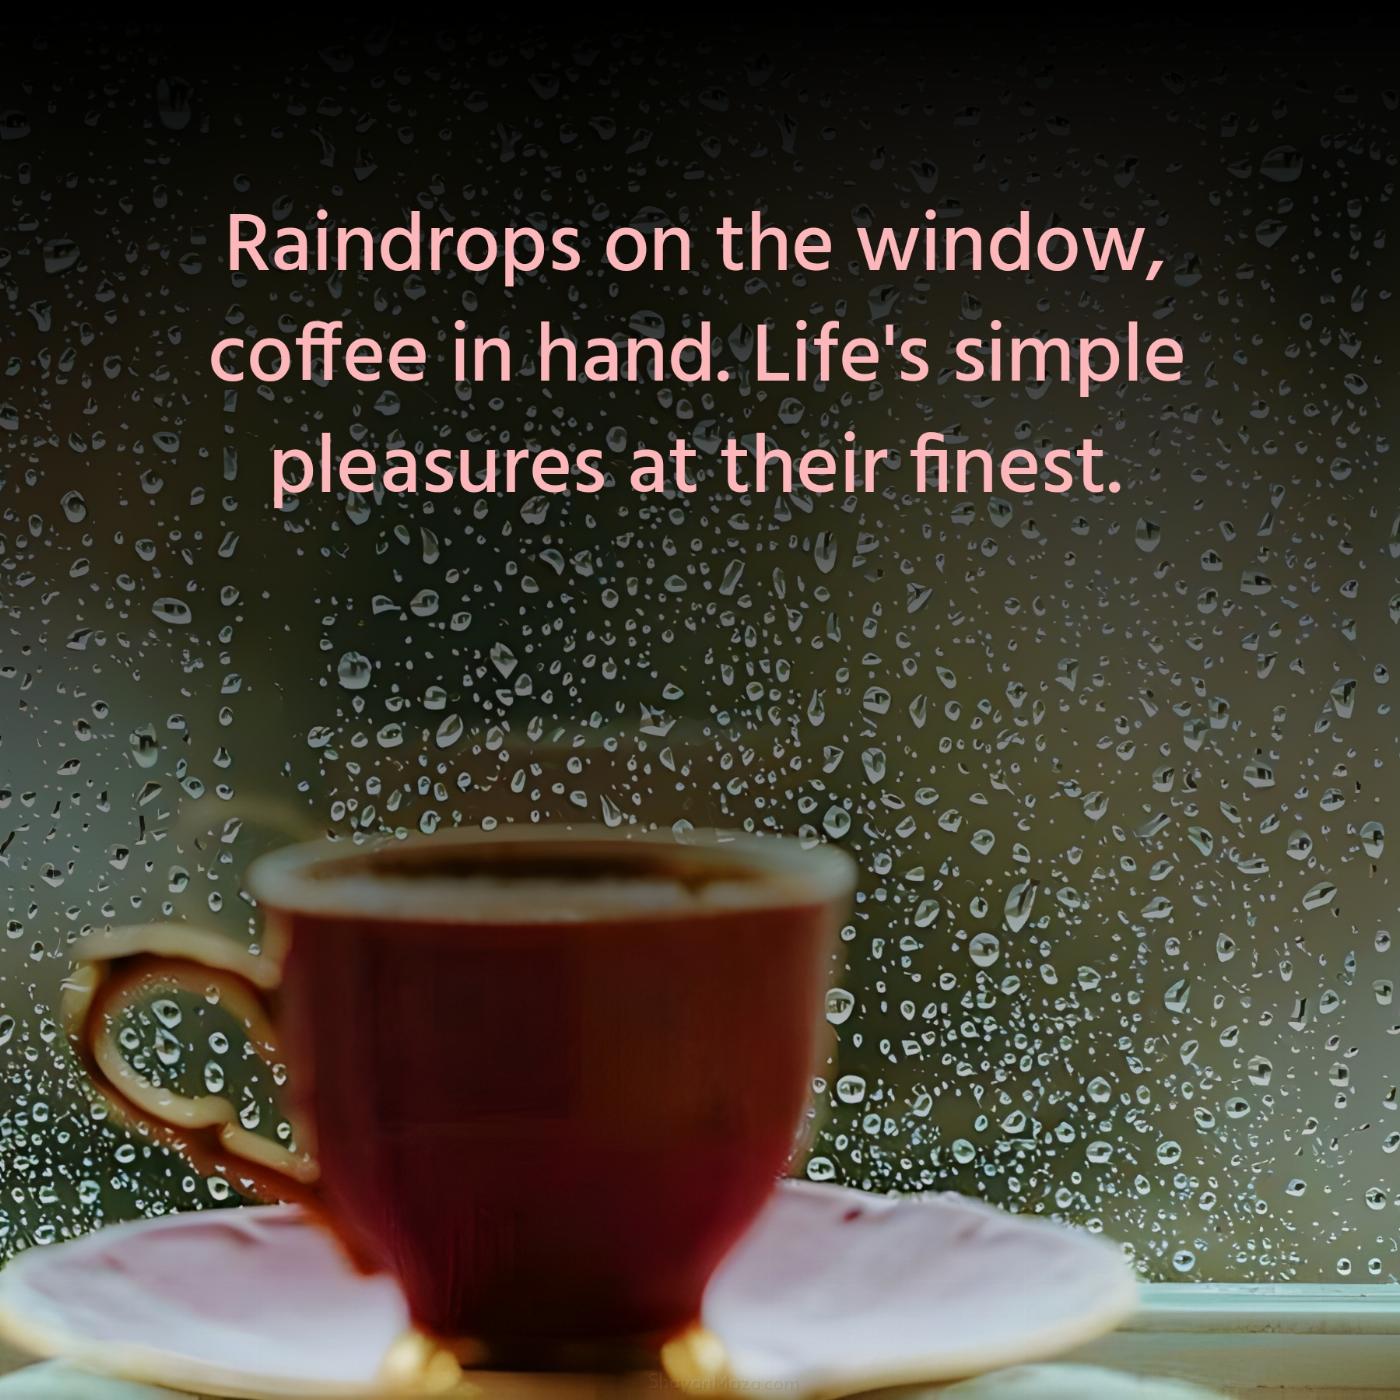 Raindrops on the window coffee in hand